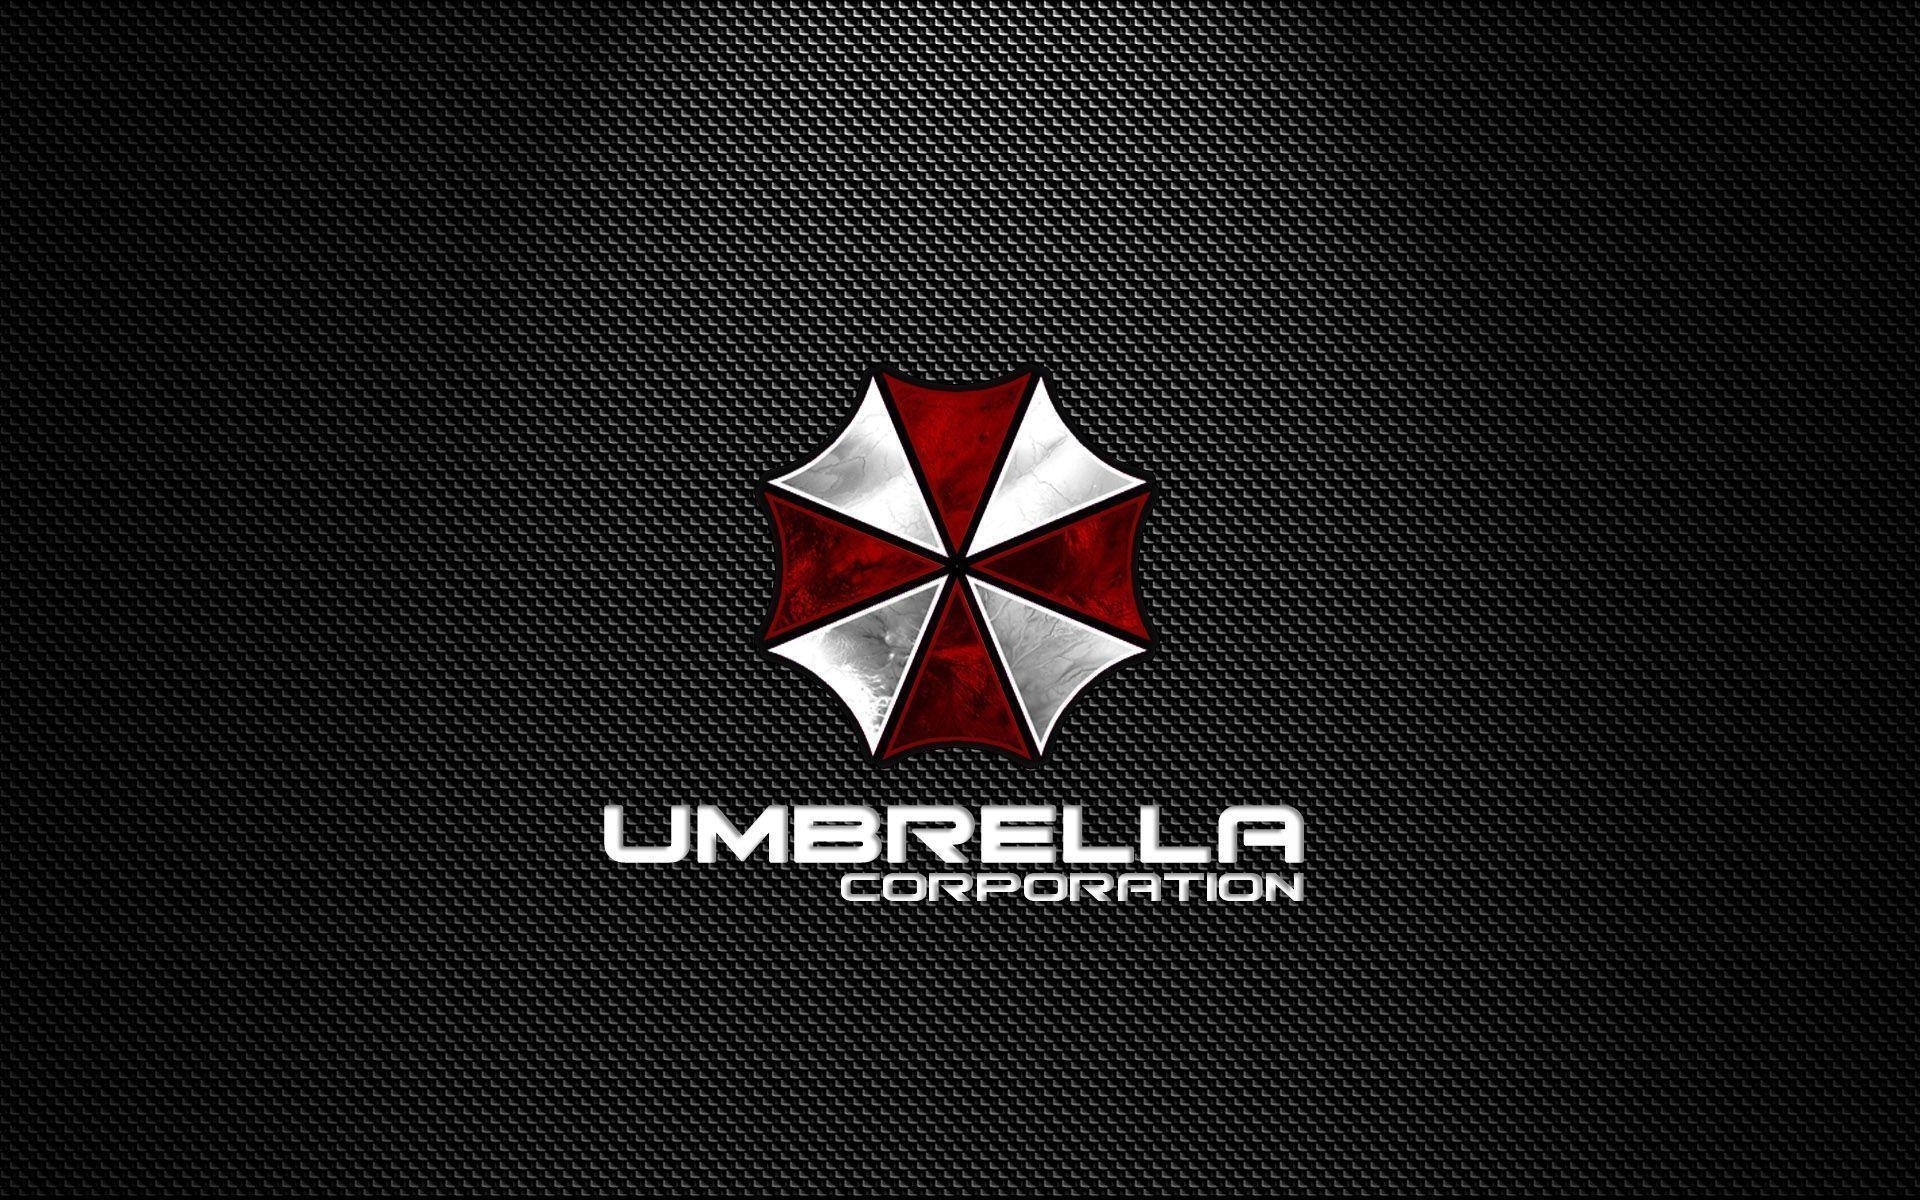 10 New Umbrella Corporation Wallpaper Hd FULL HD 1920×1080 For PC Background